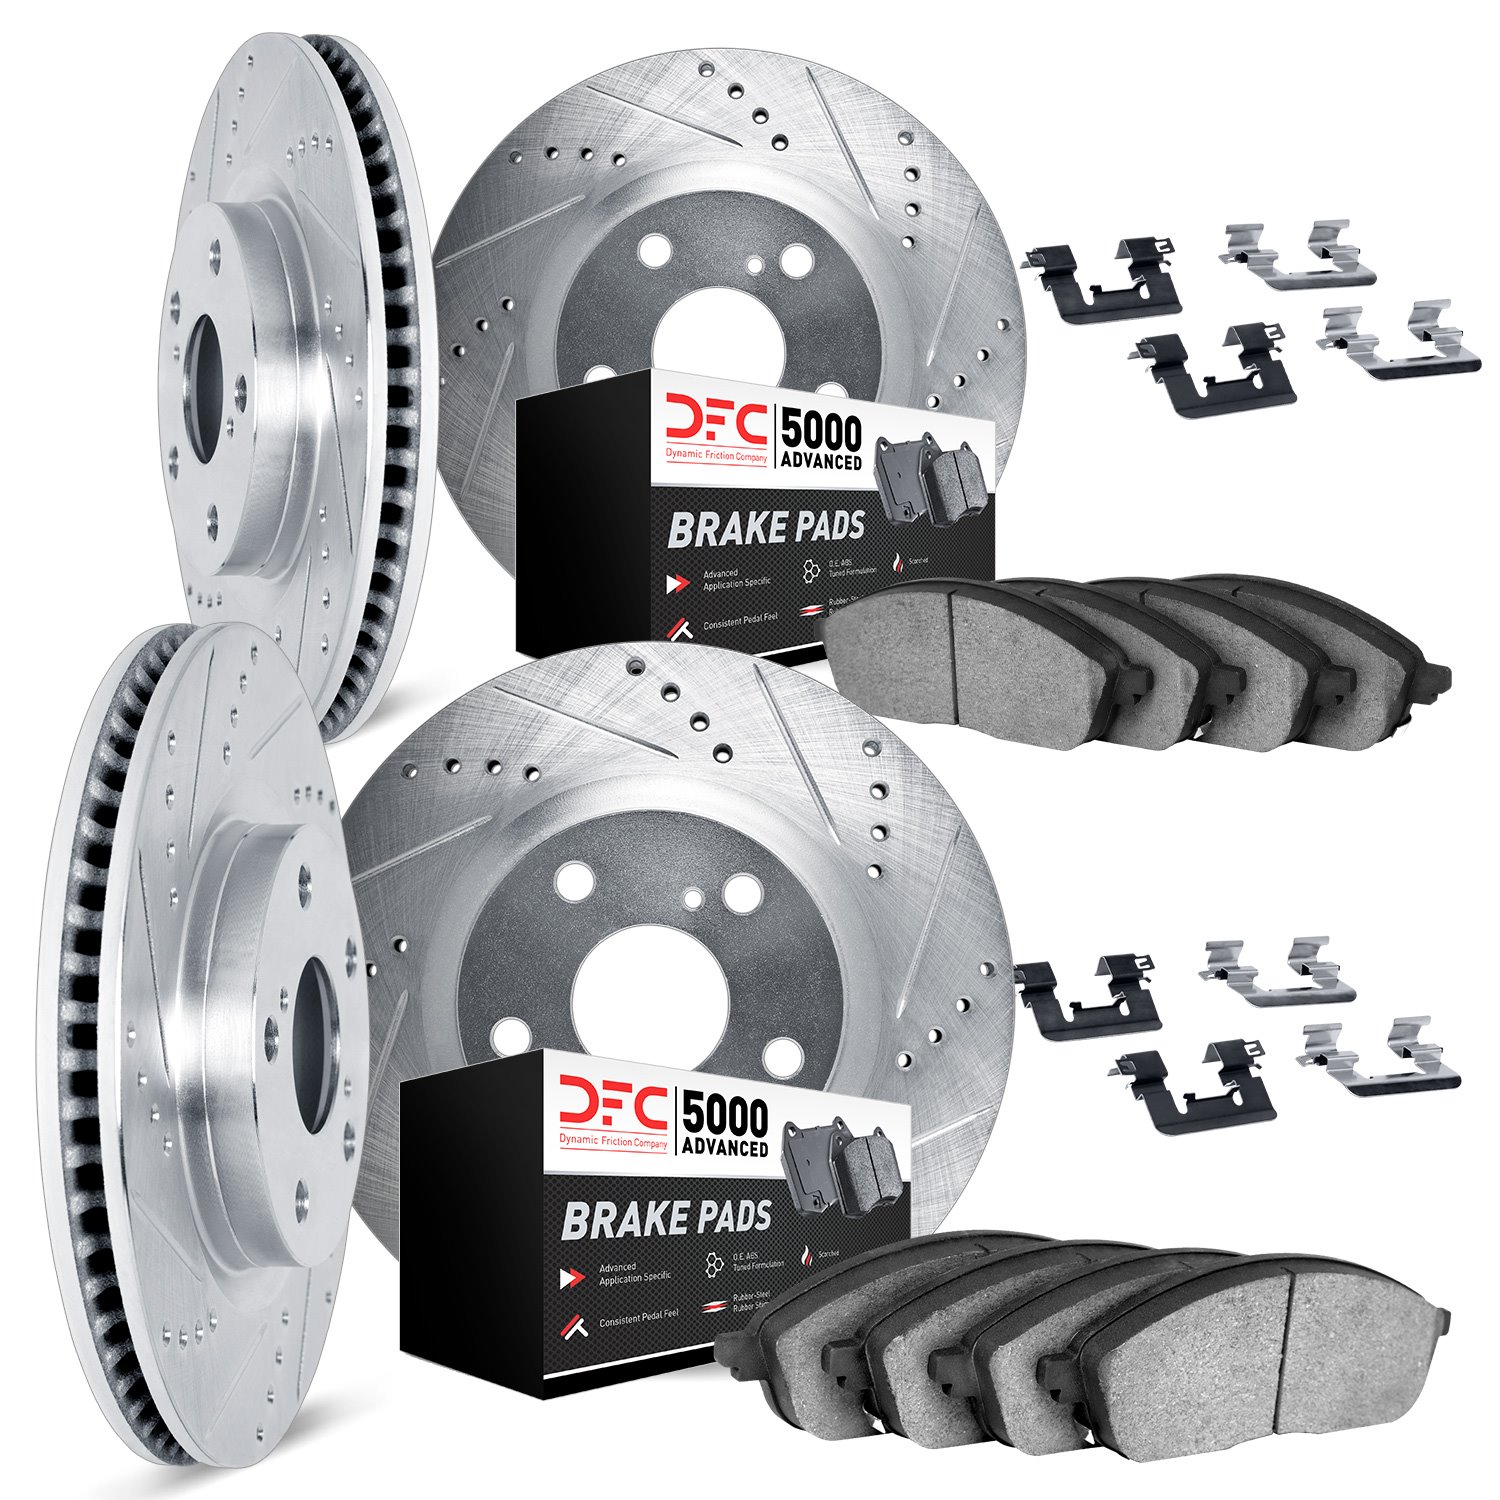 7514-68006 Drilled/Slotted Brake Rotors w/5000 Advanced Brake Pads Kit & Hardware [Silver], 2014-2014 Infiniti/Nissan, Position: